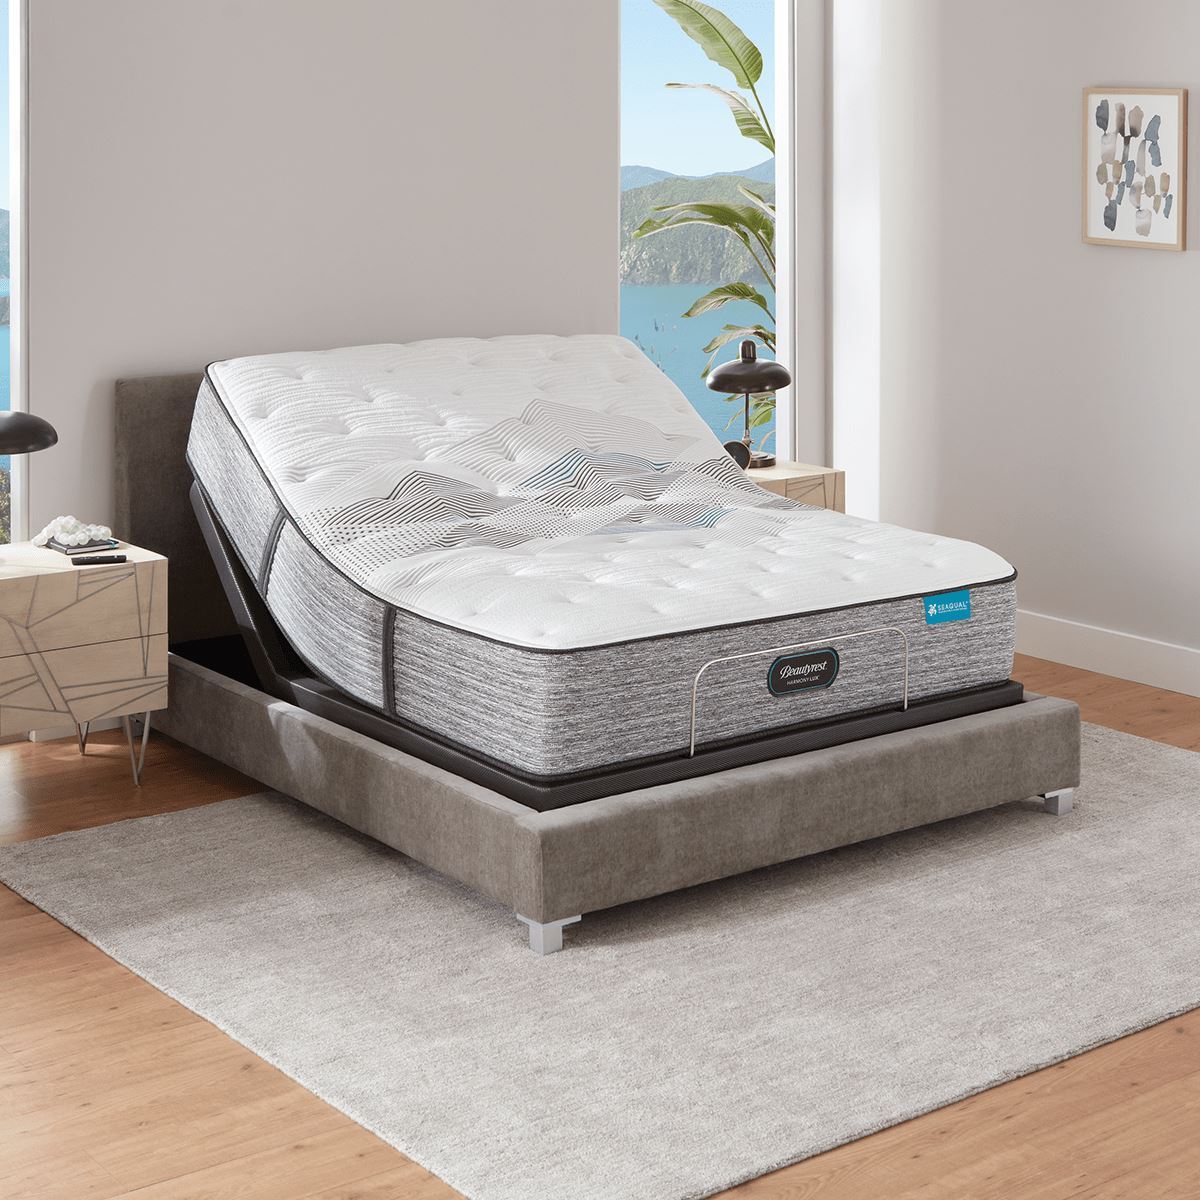 Beautyrest Harmony Lux Carbon Medium Mattress In Bedroom On Adjustable Base